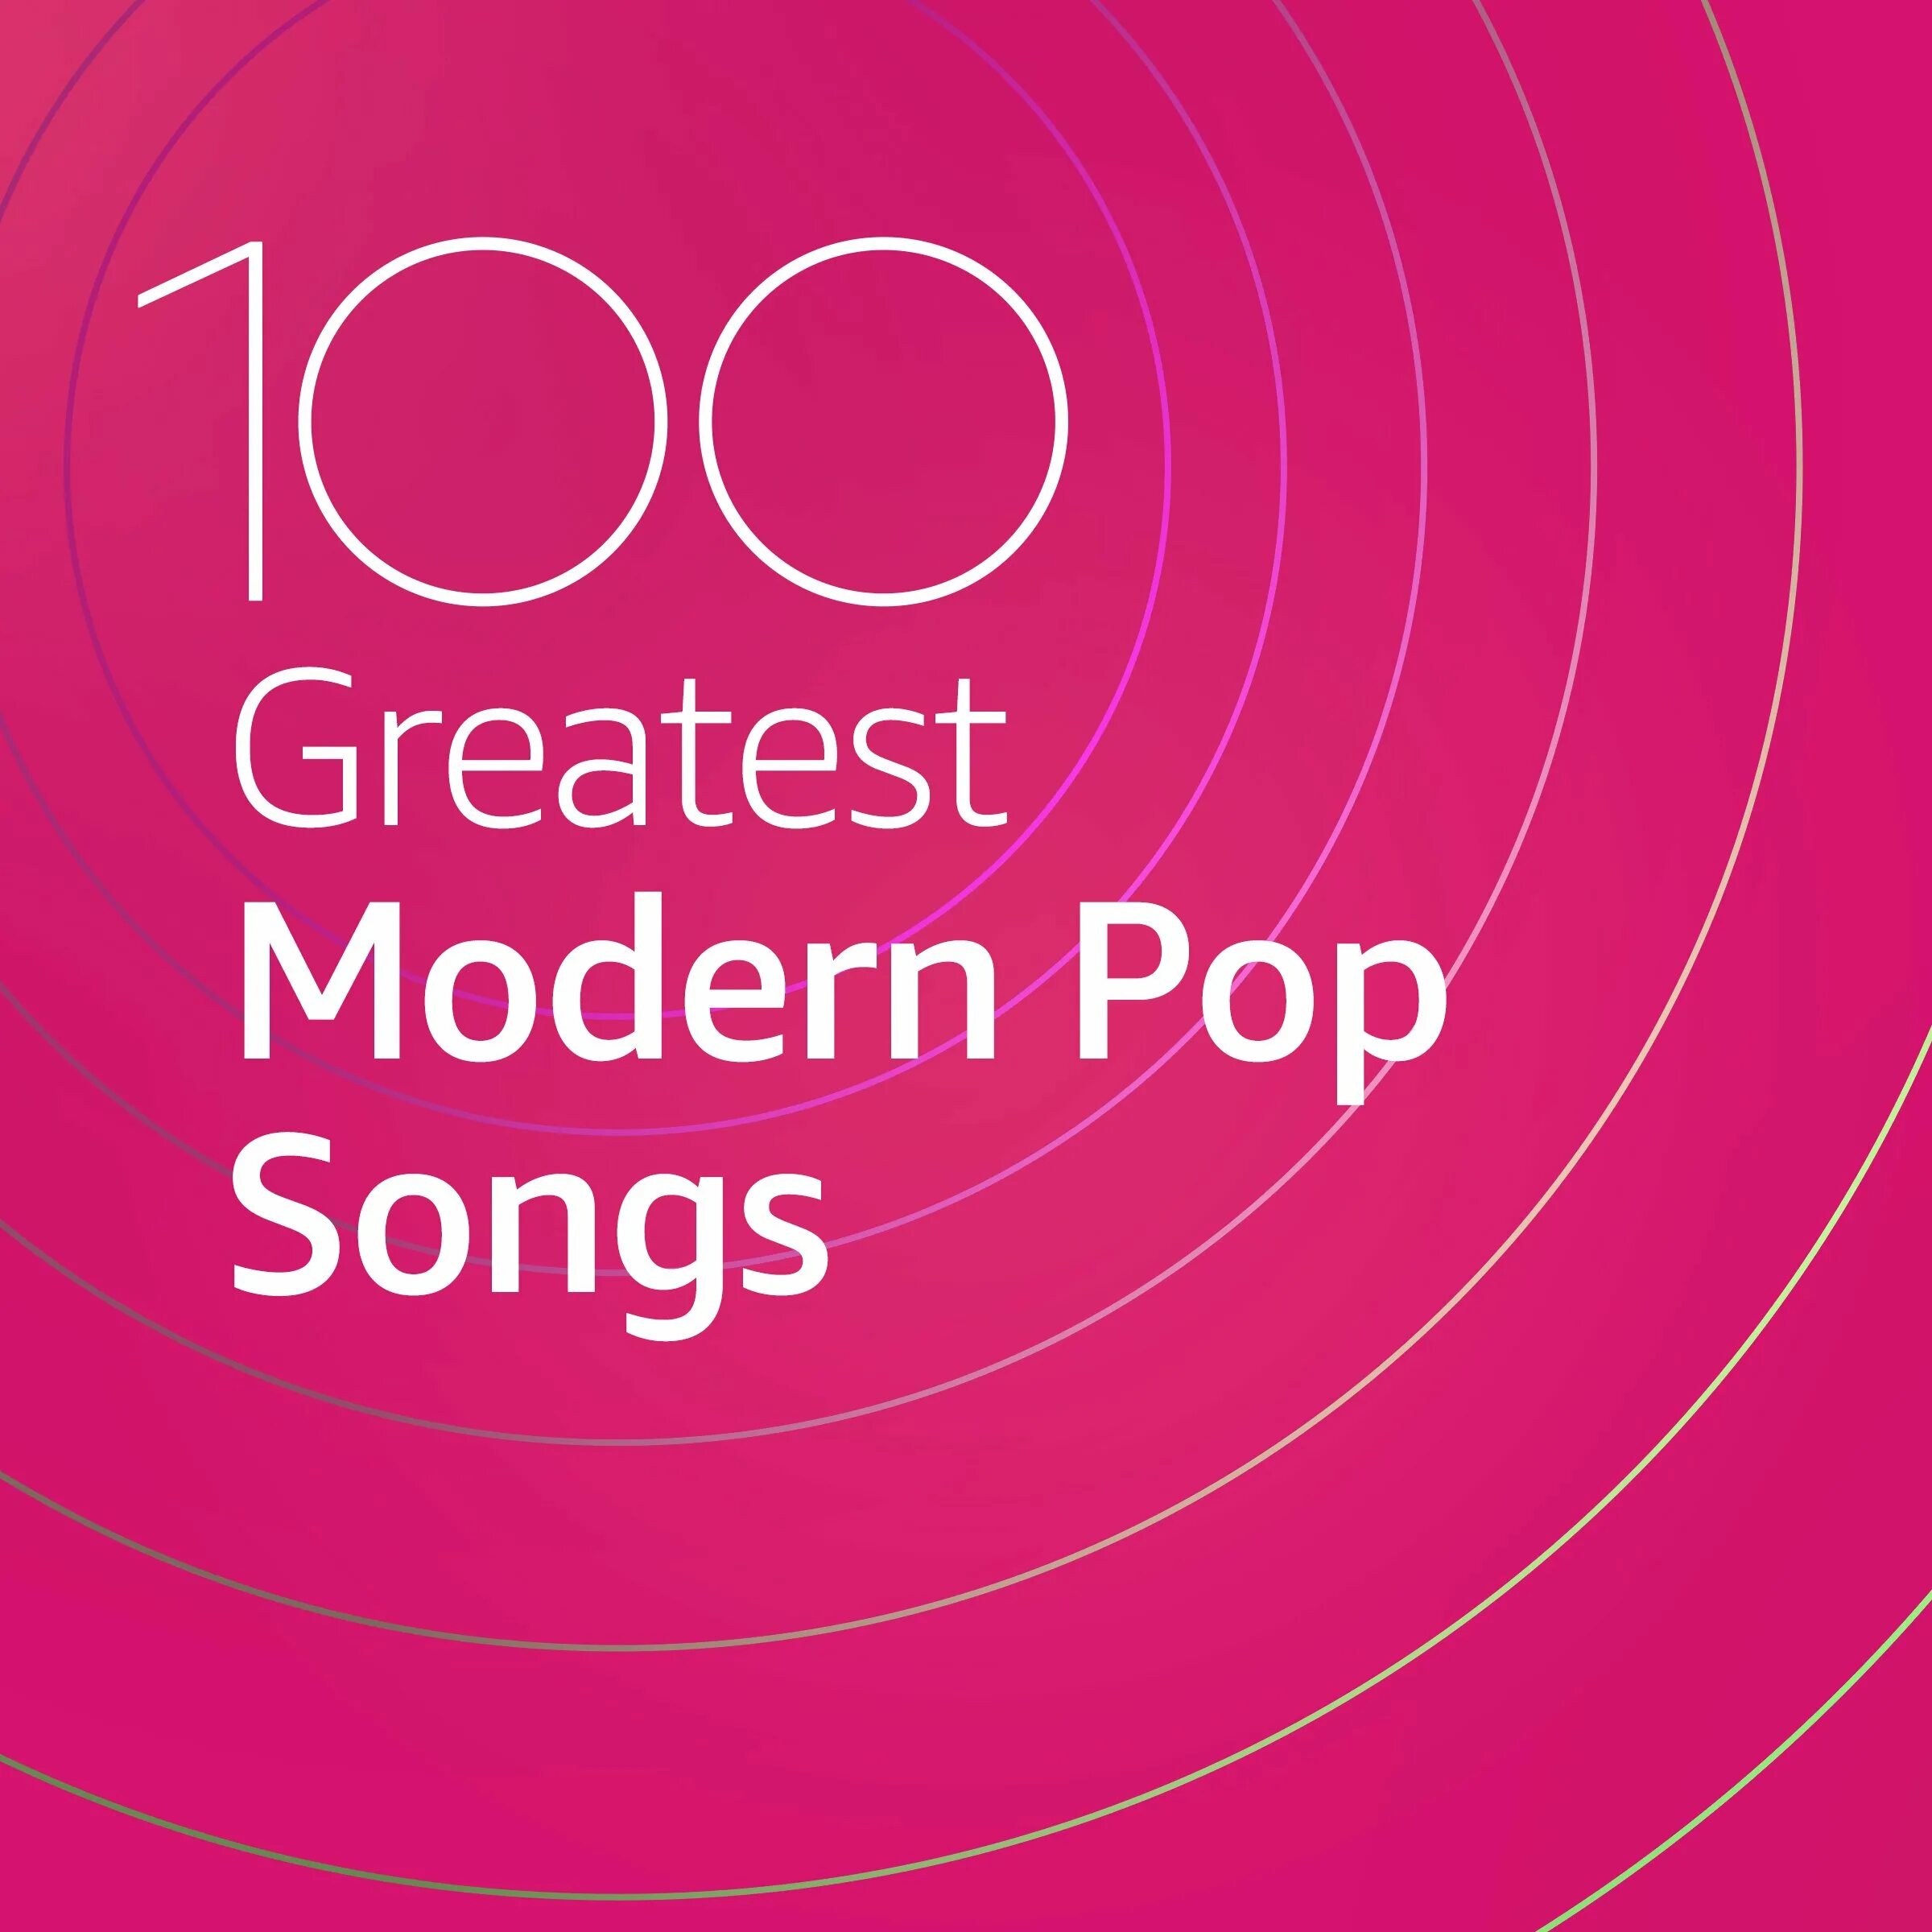 Музыка зарубежный 2020 mp3. Va - 100 Greatest 21st Century number 1s (2020). 100 Greatest Pop Songs. Va - 100 Greatest Ballads. 100 Greatest Love Songs.